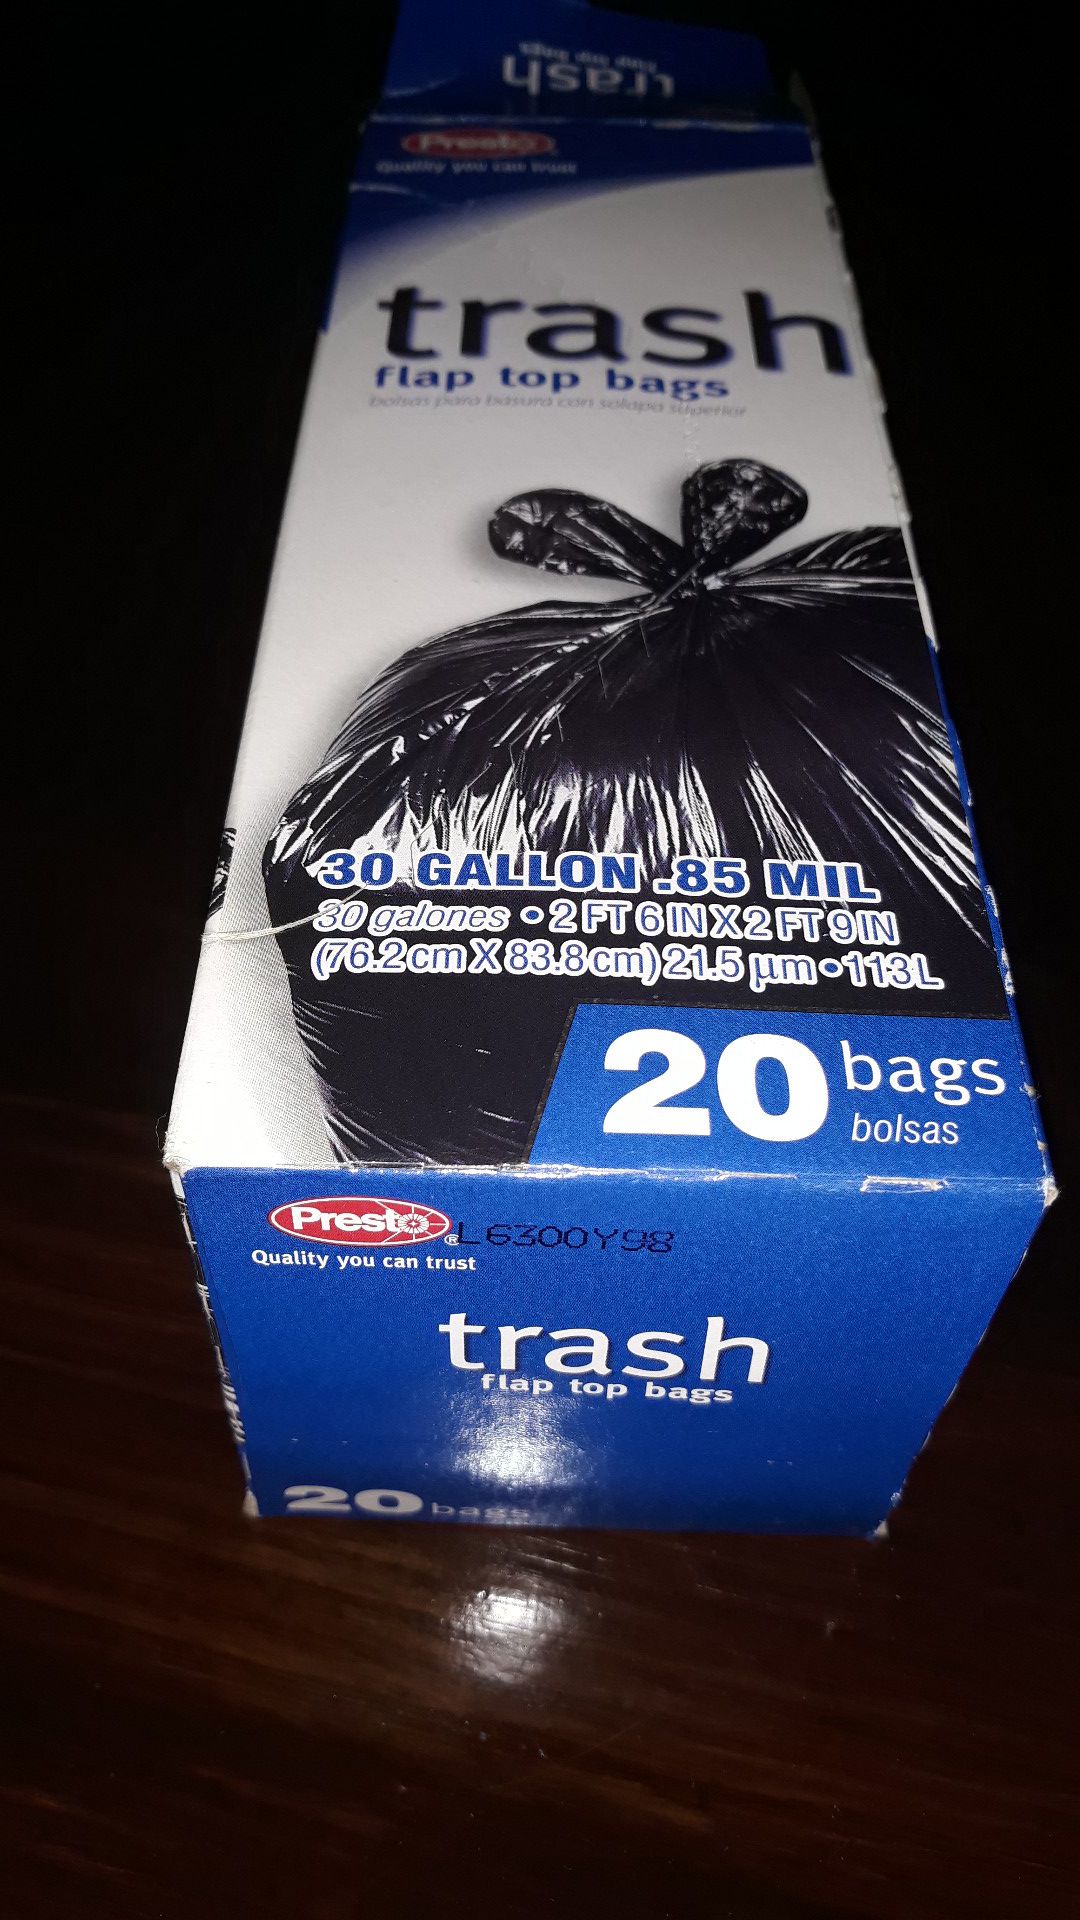 Presto Large Black Trash Bags (Box of 20)